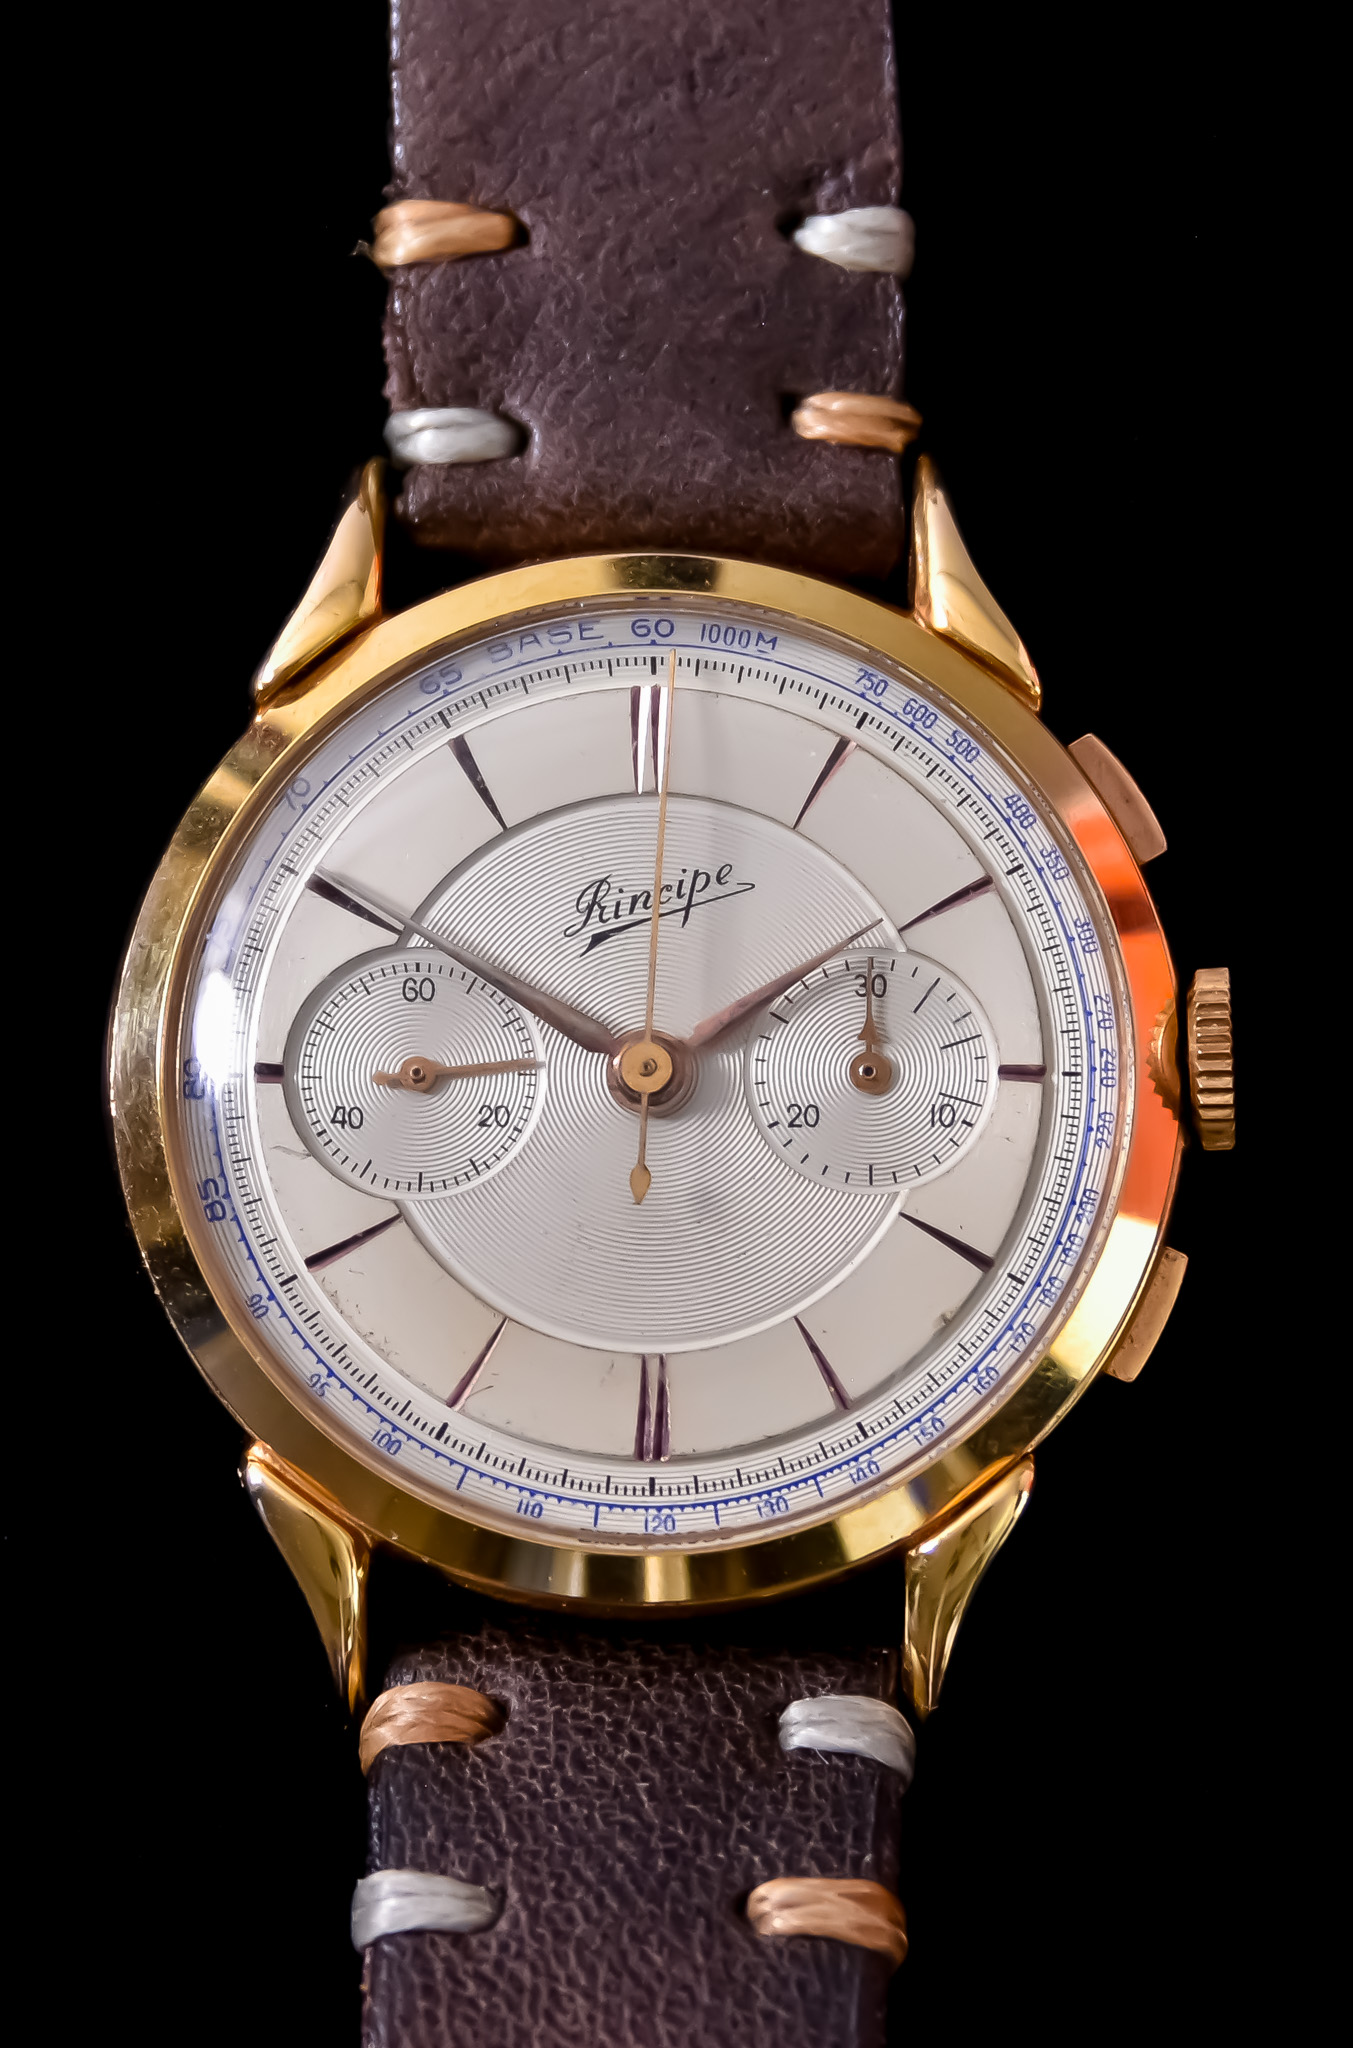 A Gentleman's Manual Wind Chronograph Wristwatch, by Principe, Serial No. 1109, 338mm diameter